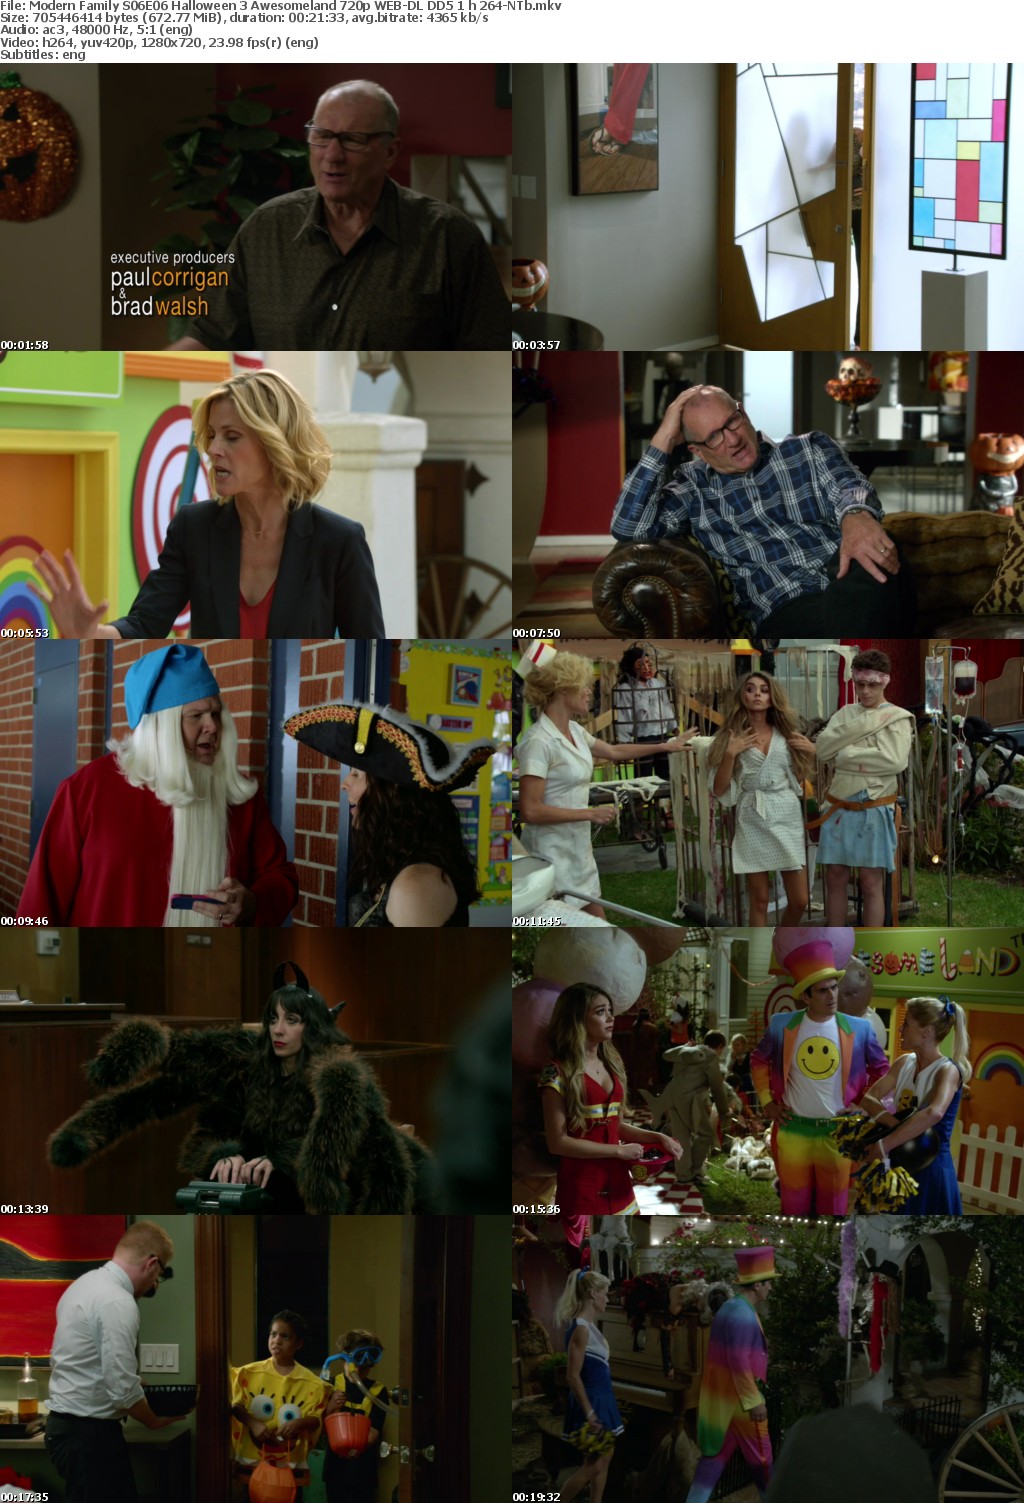 Modern Family S06E06 Halloween 3 Awesomeland 720p WEB-DL DD5 1 h 264-NTb